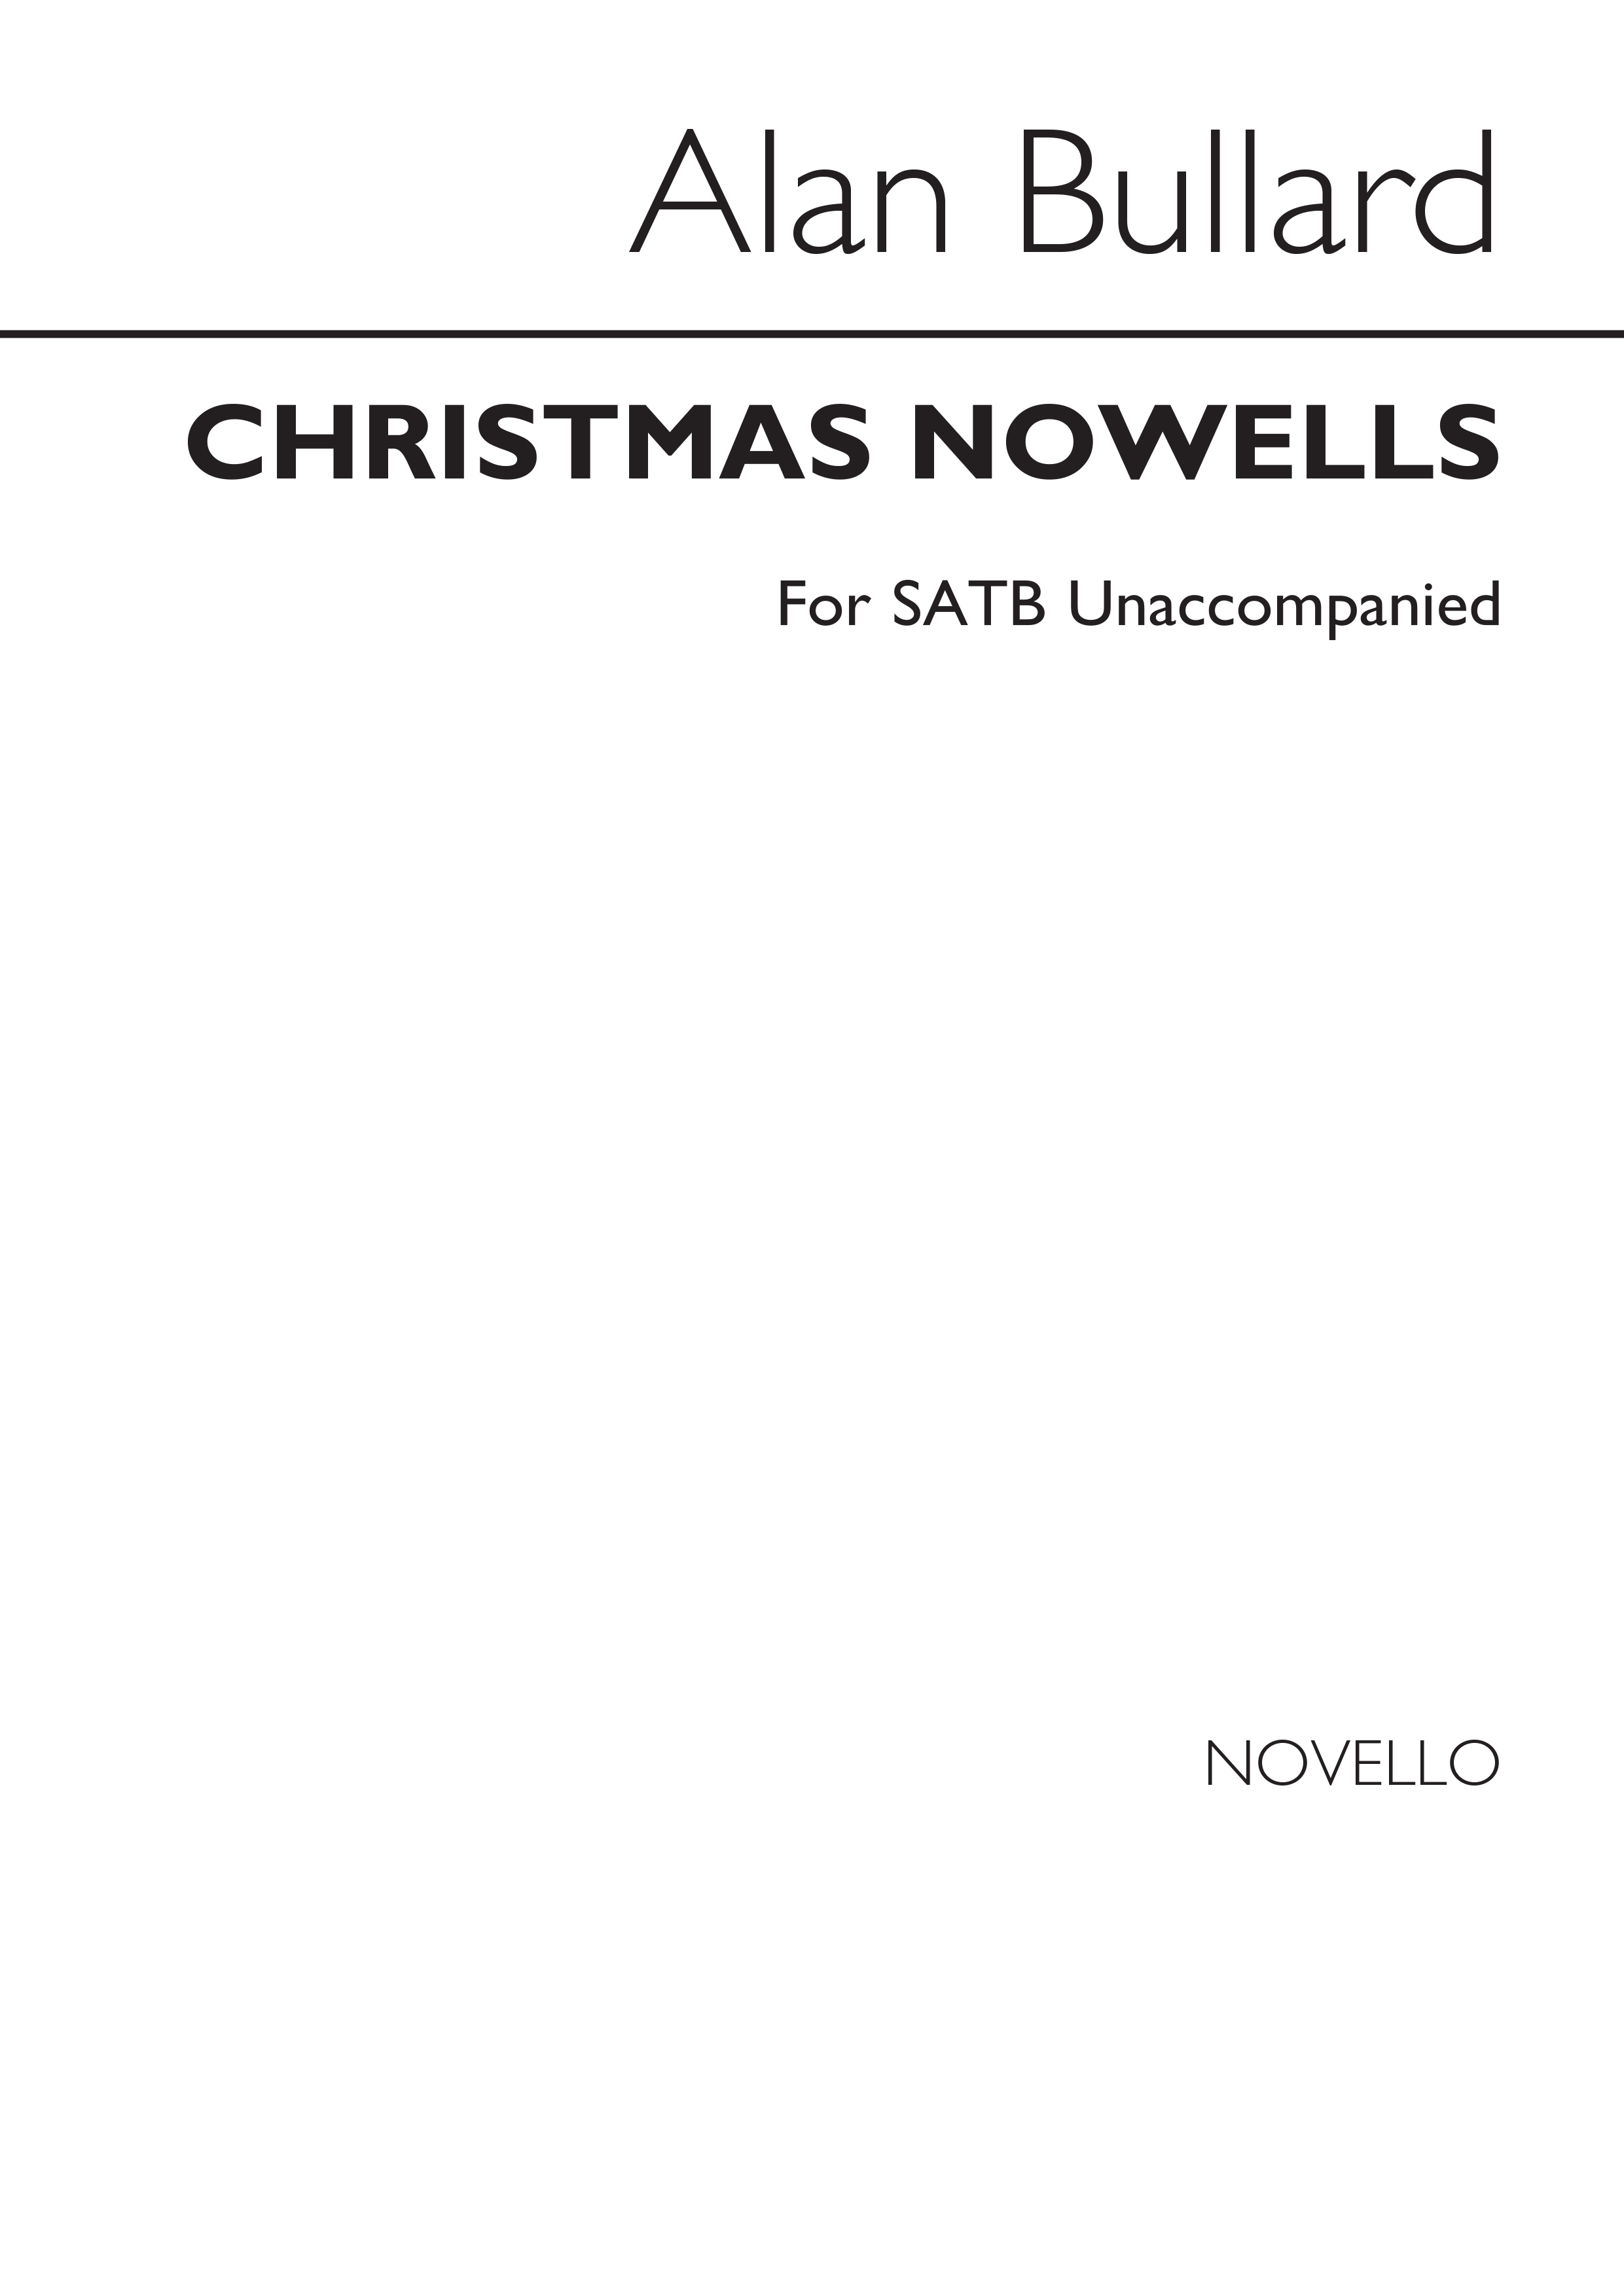 Bullard: Christmas Nowells